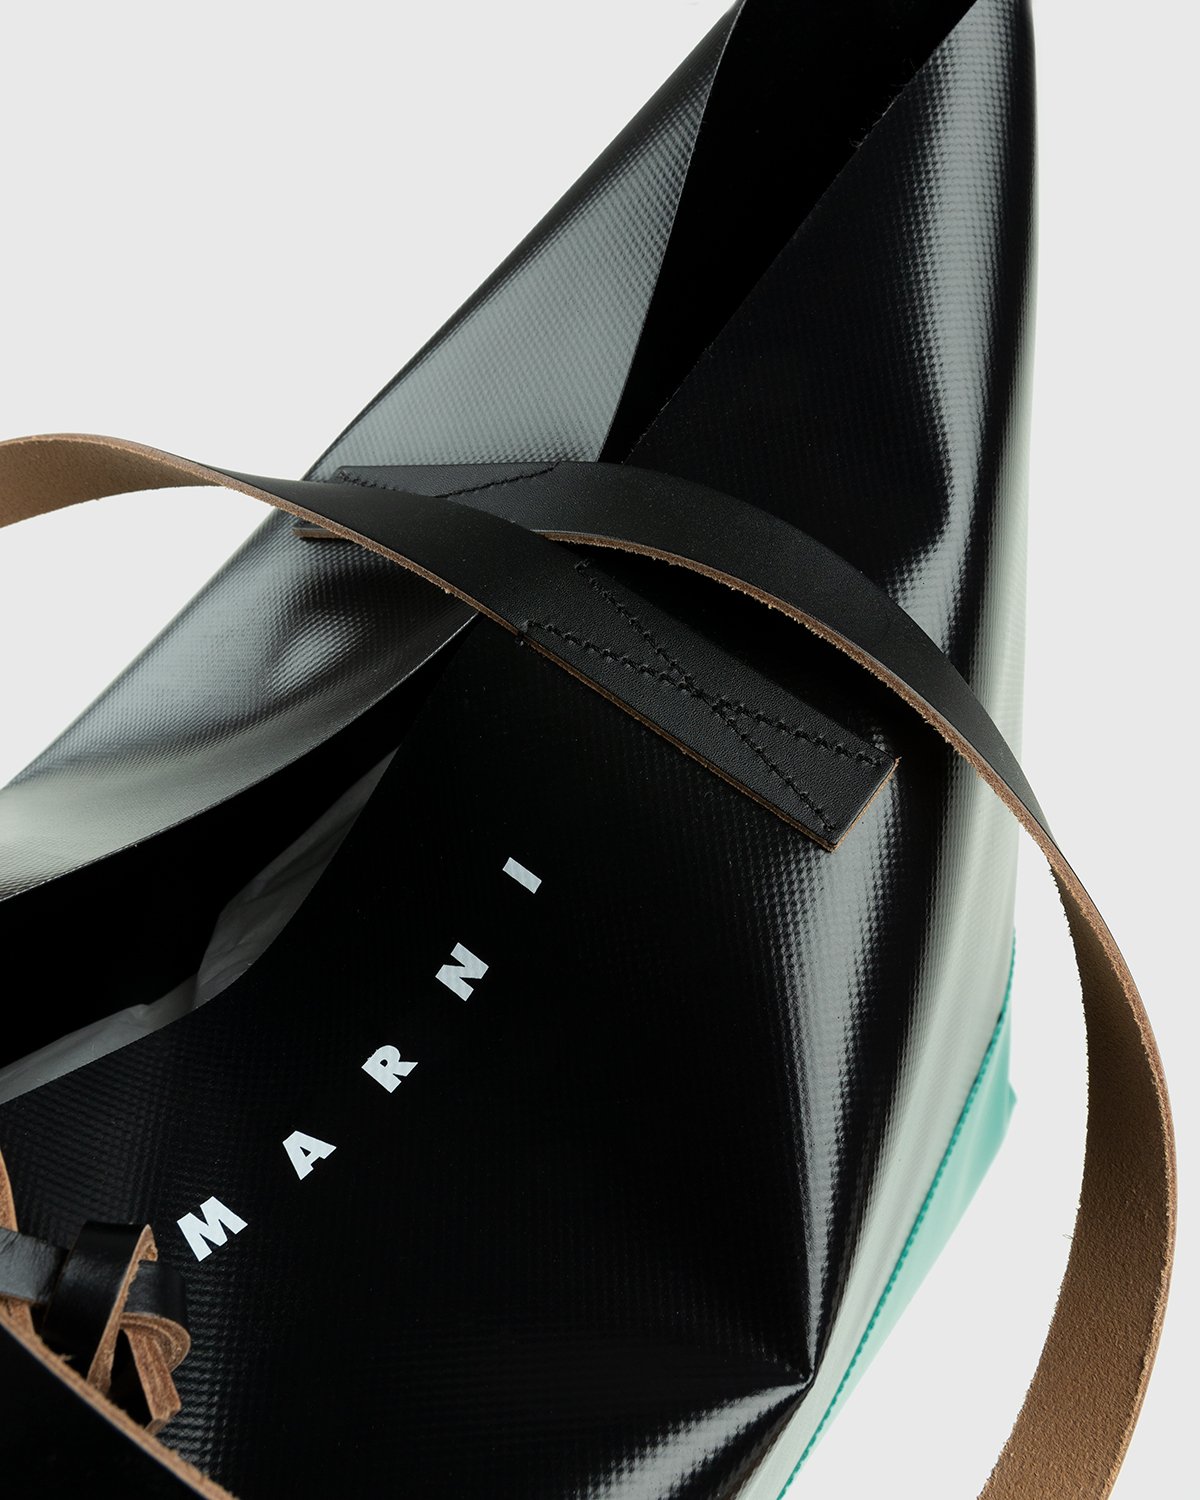 Marni - Tribeca Two-Tone Tote Bag Black/Green - Accessories - Black - Image 5